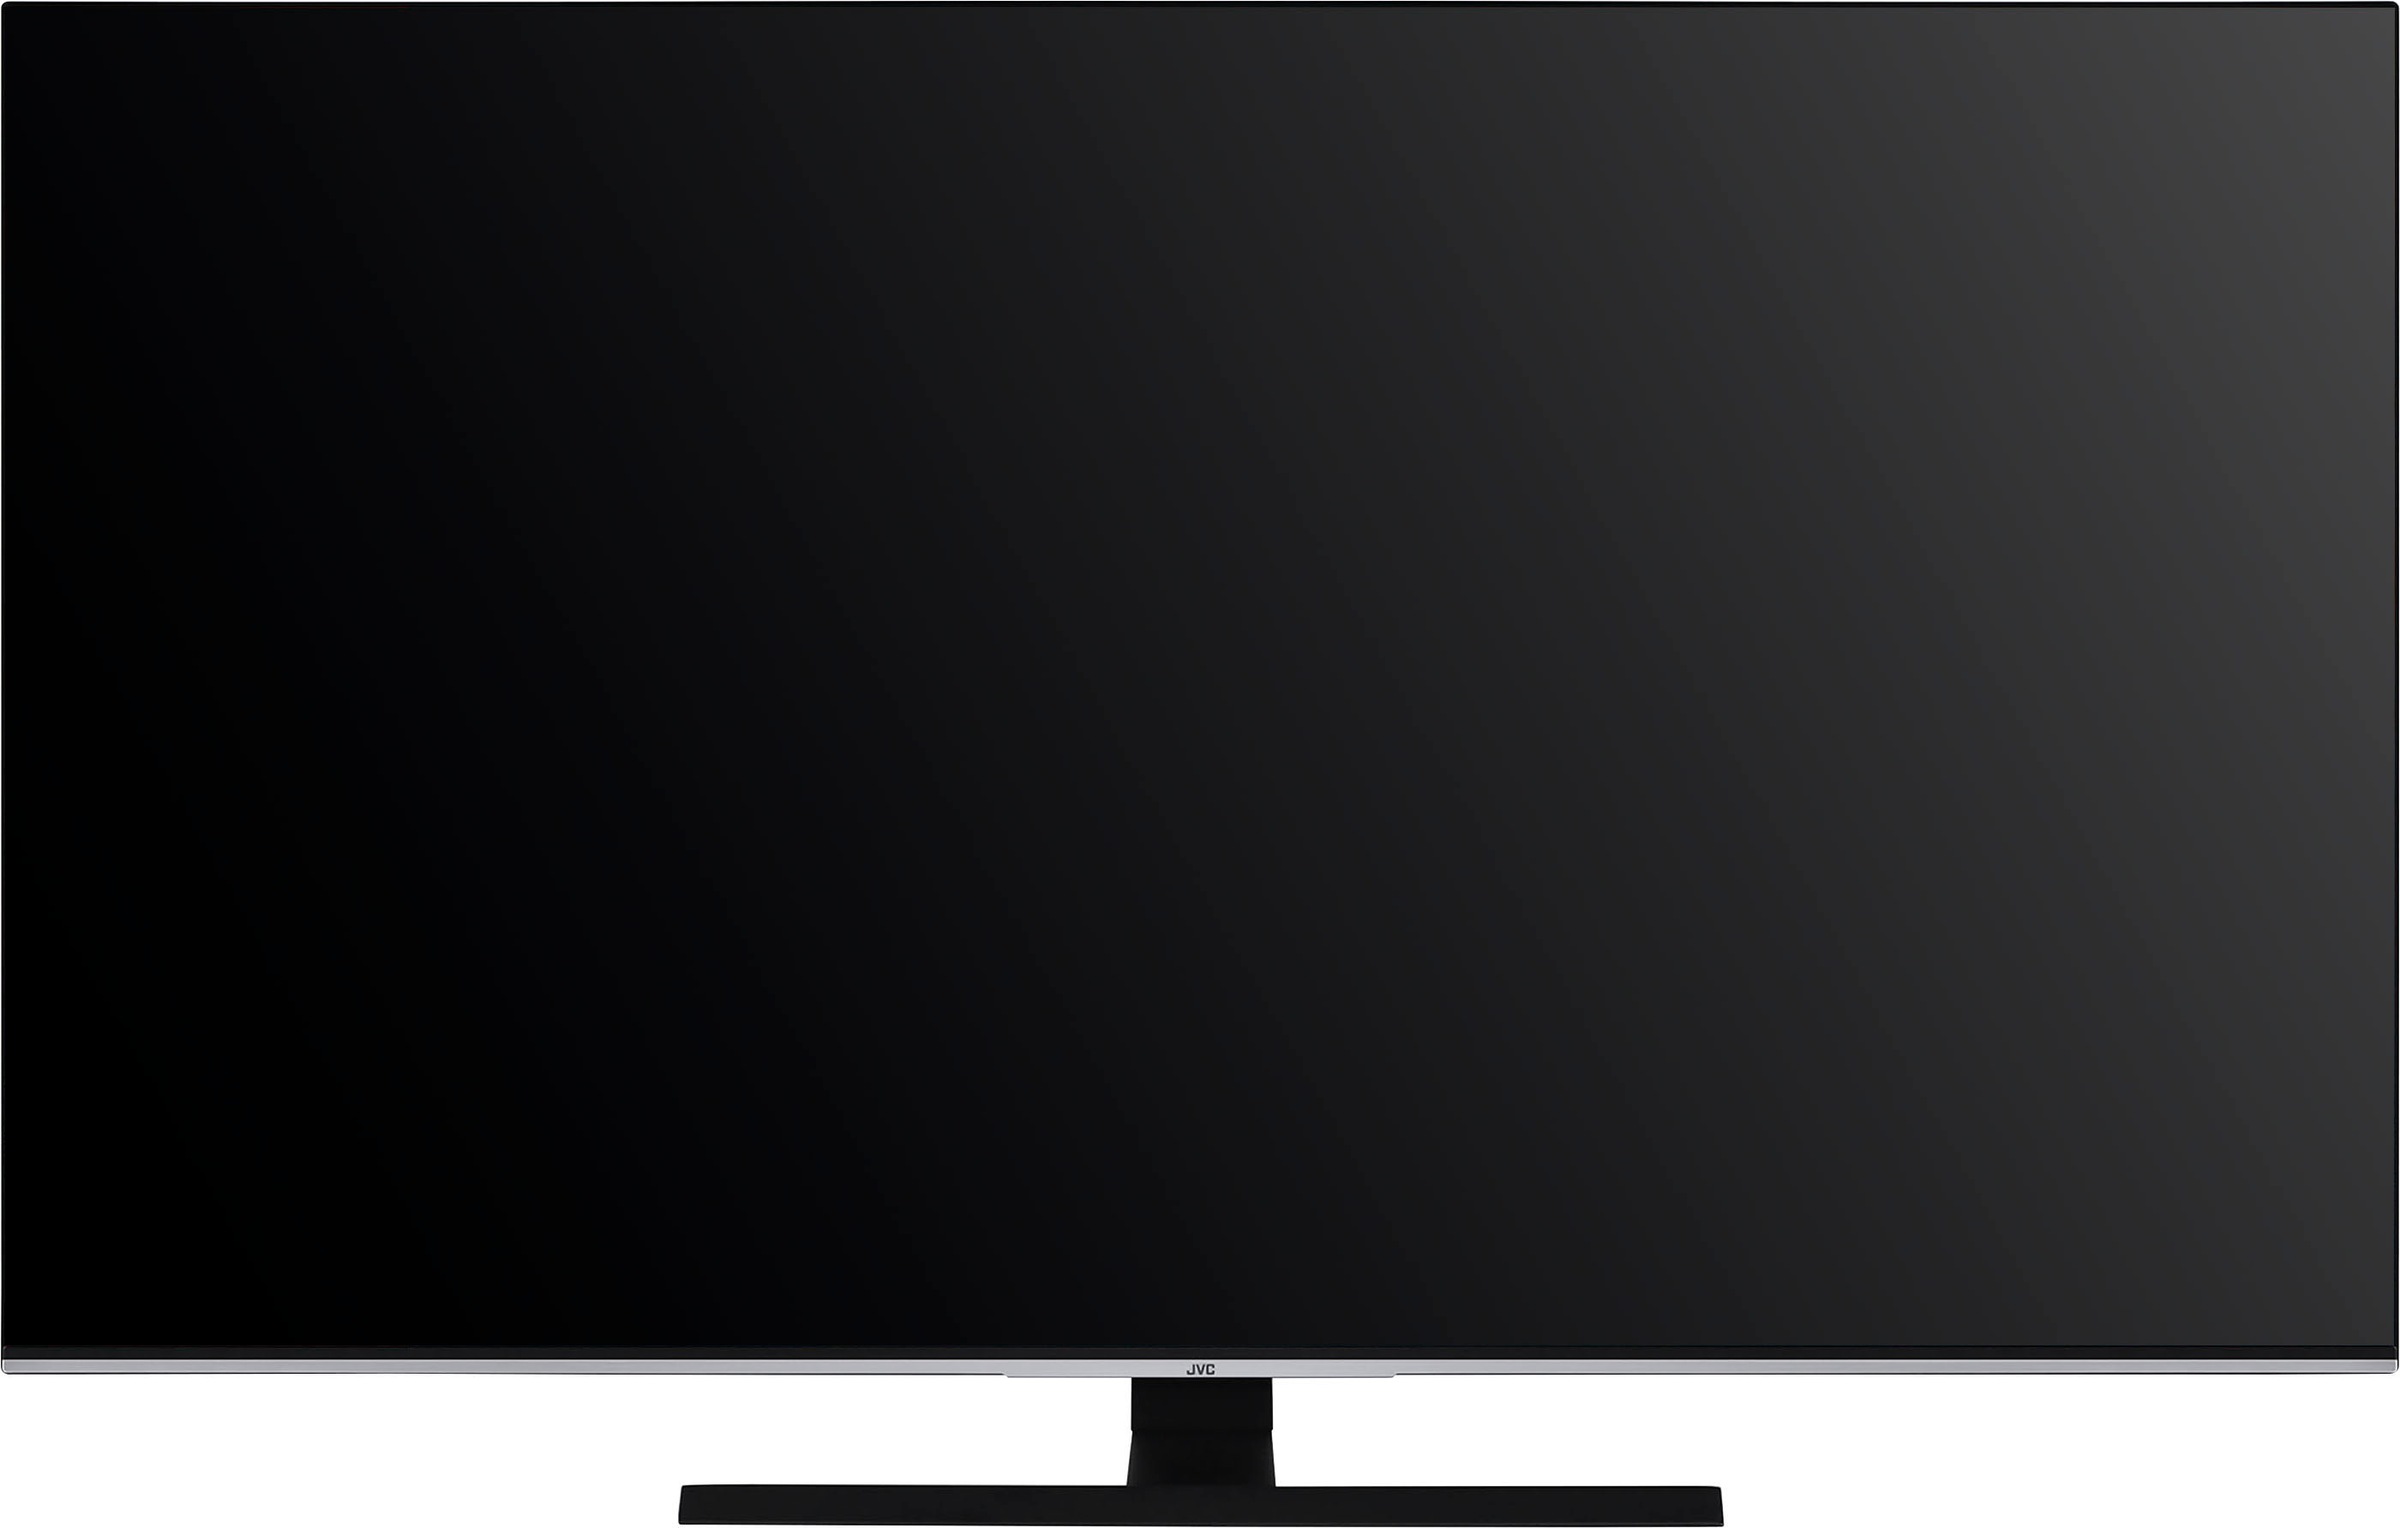 JVC LED-Fernseher, 164 cm/65 Zoll, 4K Ultra HD, Smart-TV